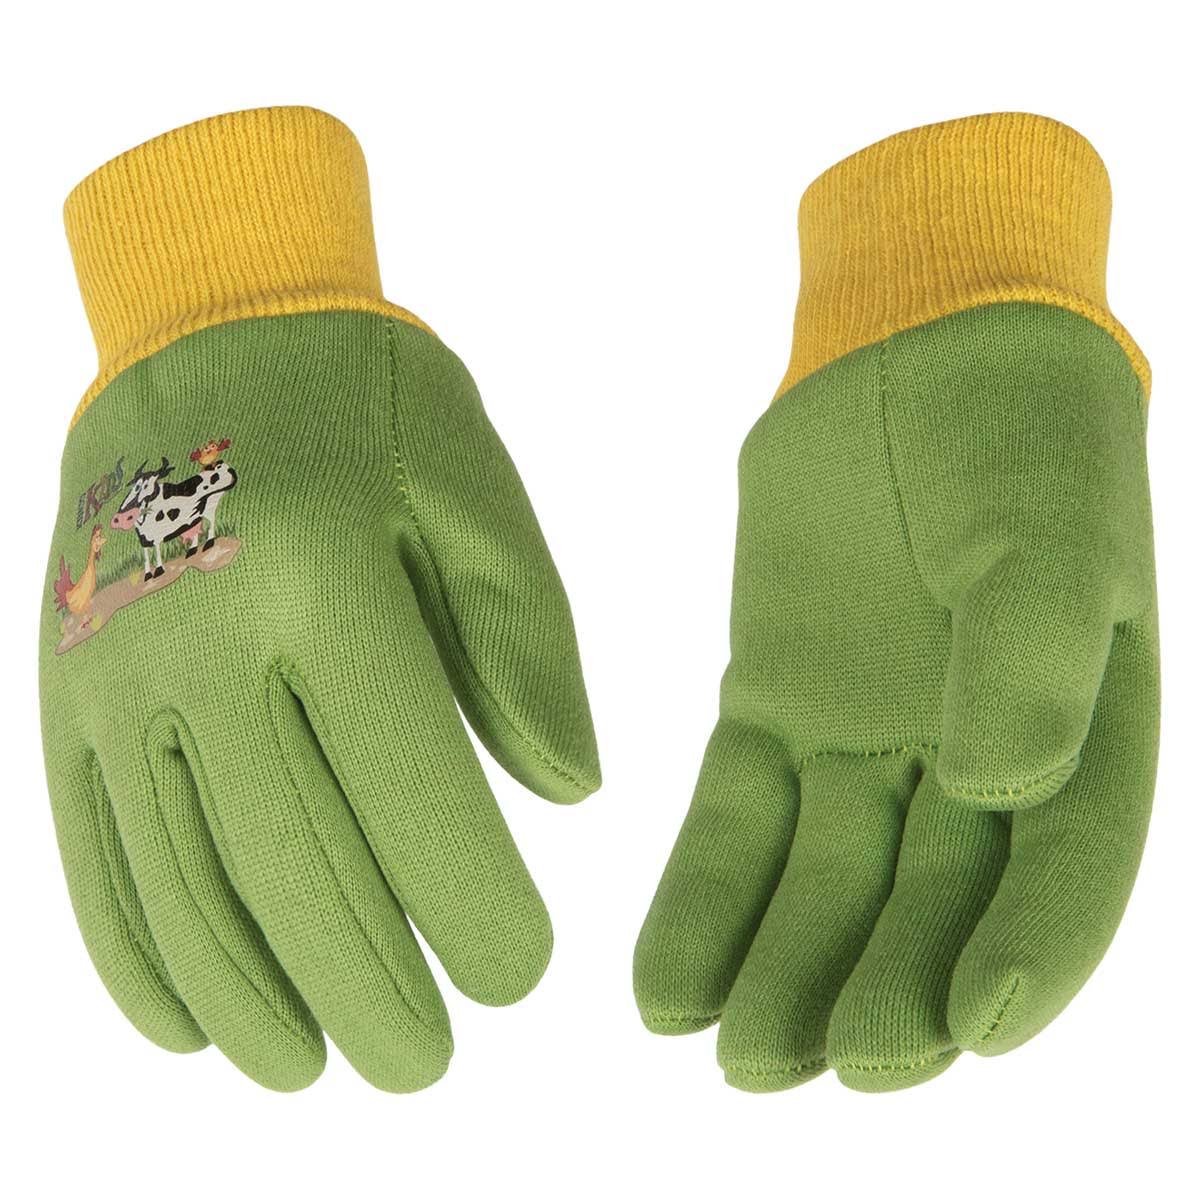 Kinco Kid's Farm Friends Jersey Gloves Green/Blue - Small 830